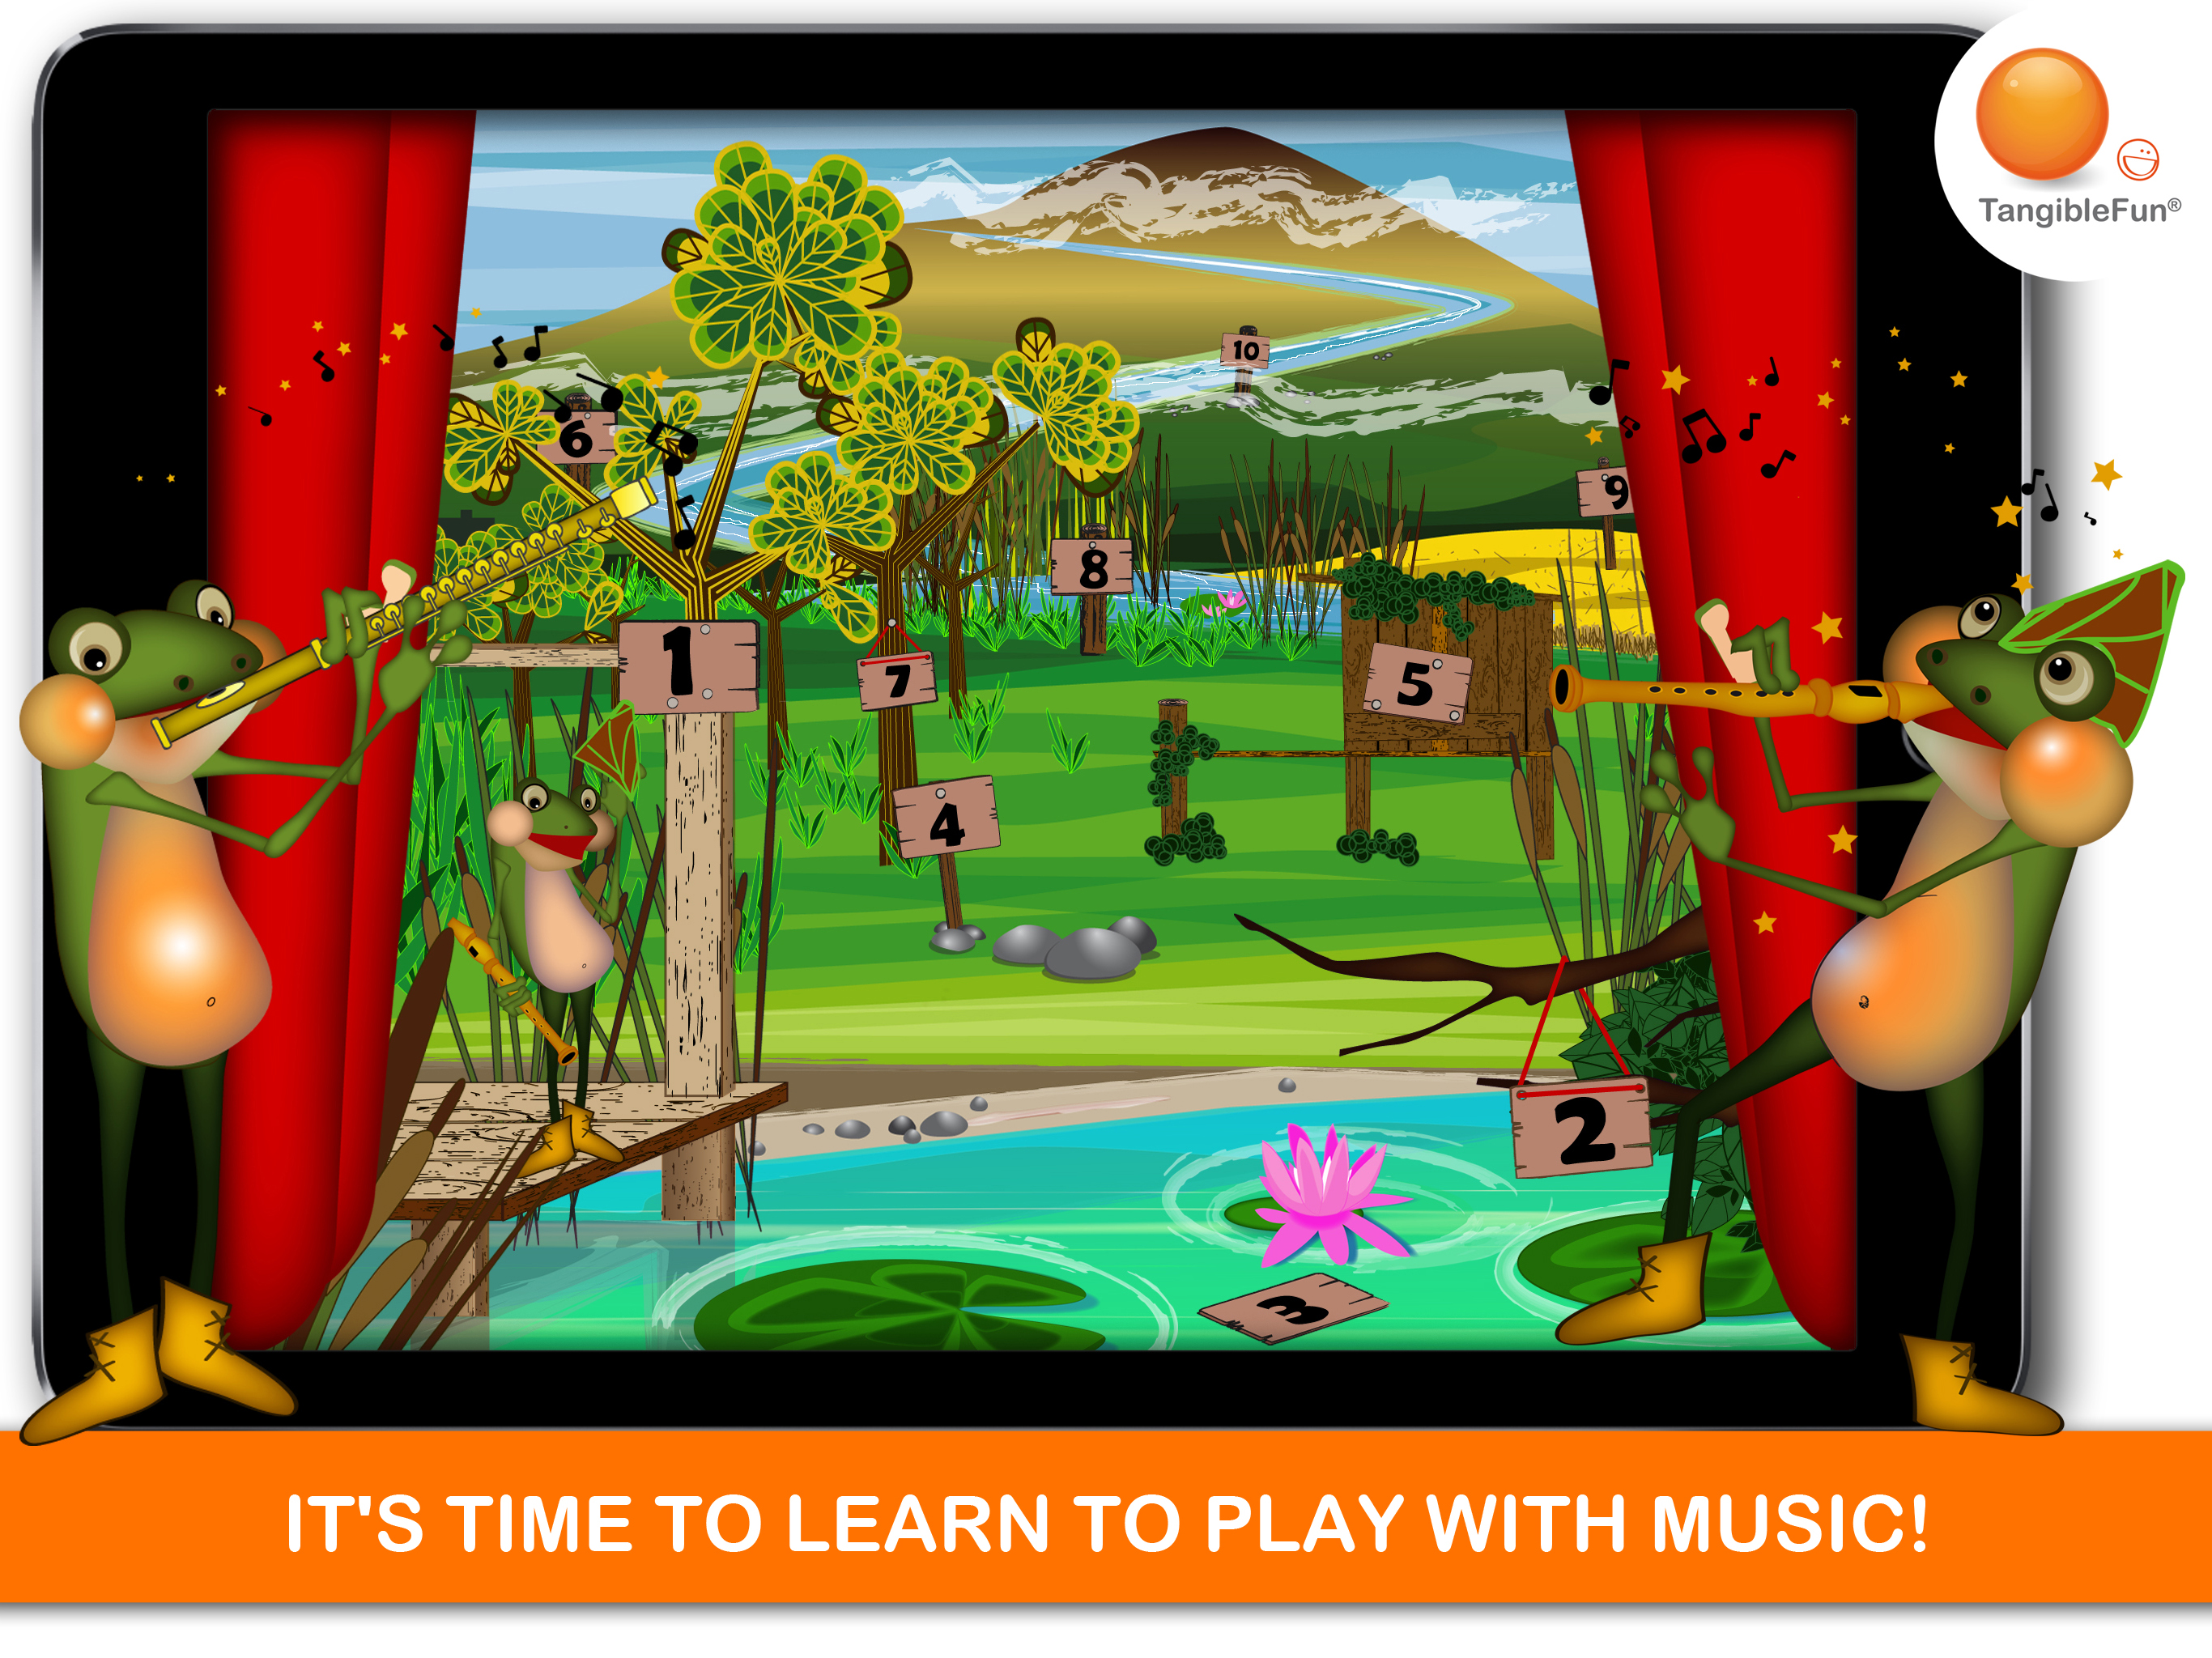 Music Games App